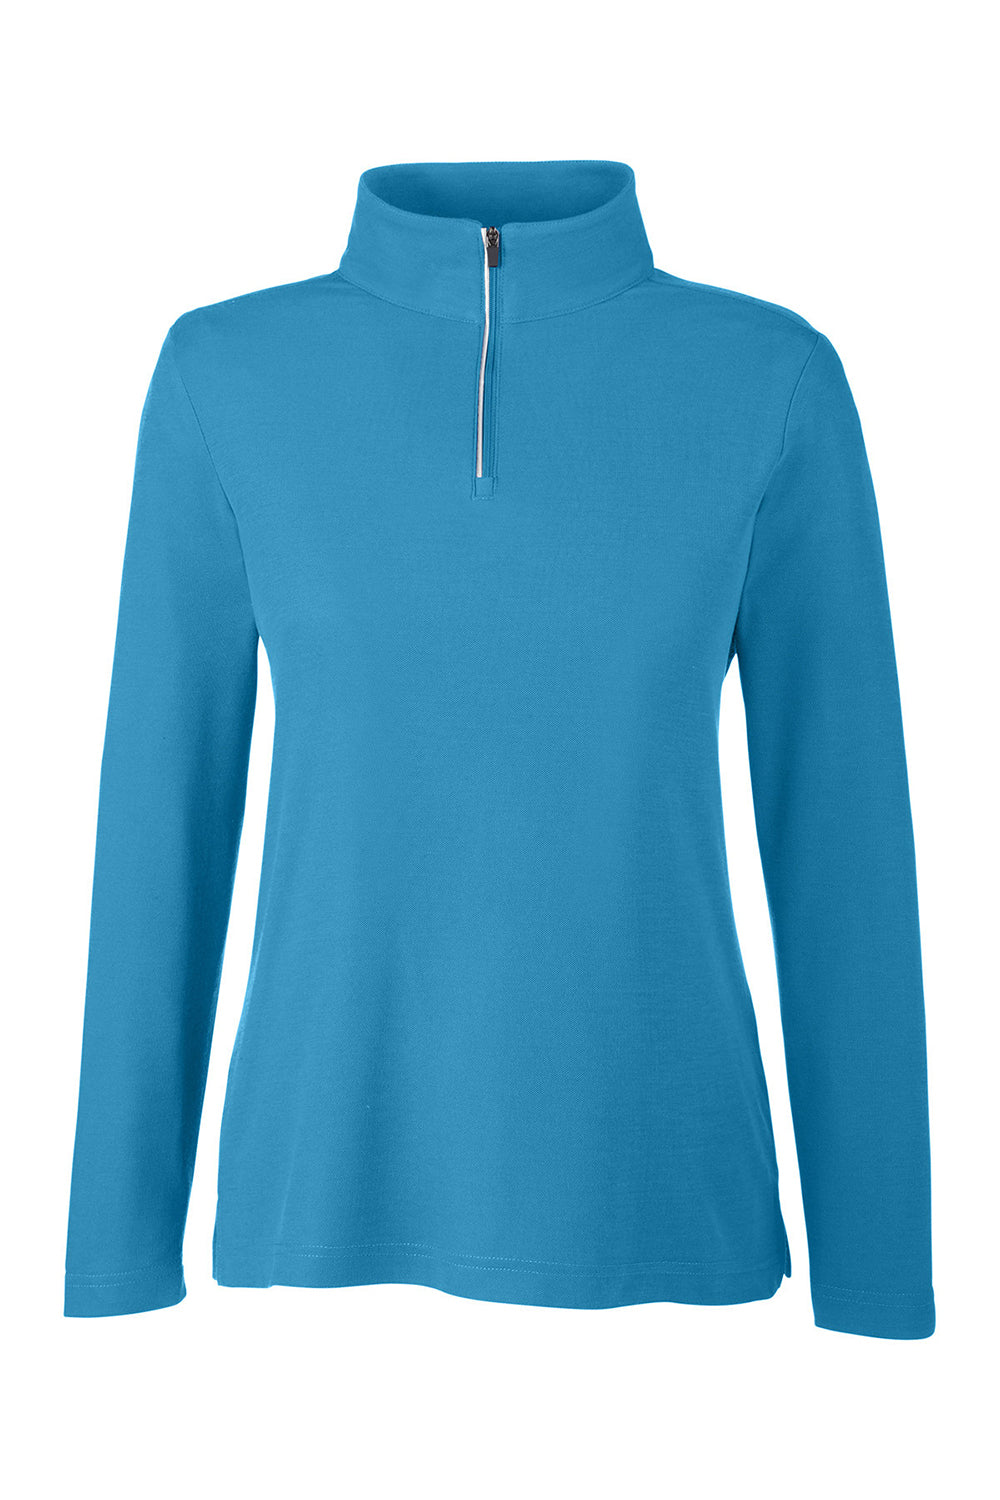 Core 365 CE405W Womens Fusion ChromaSoft Performance Moisture Wicking Pique 1/4 Zip Sweatshirt Electric Blue Flat Front